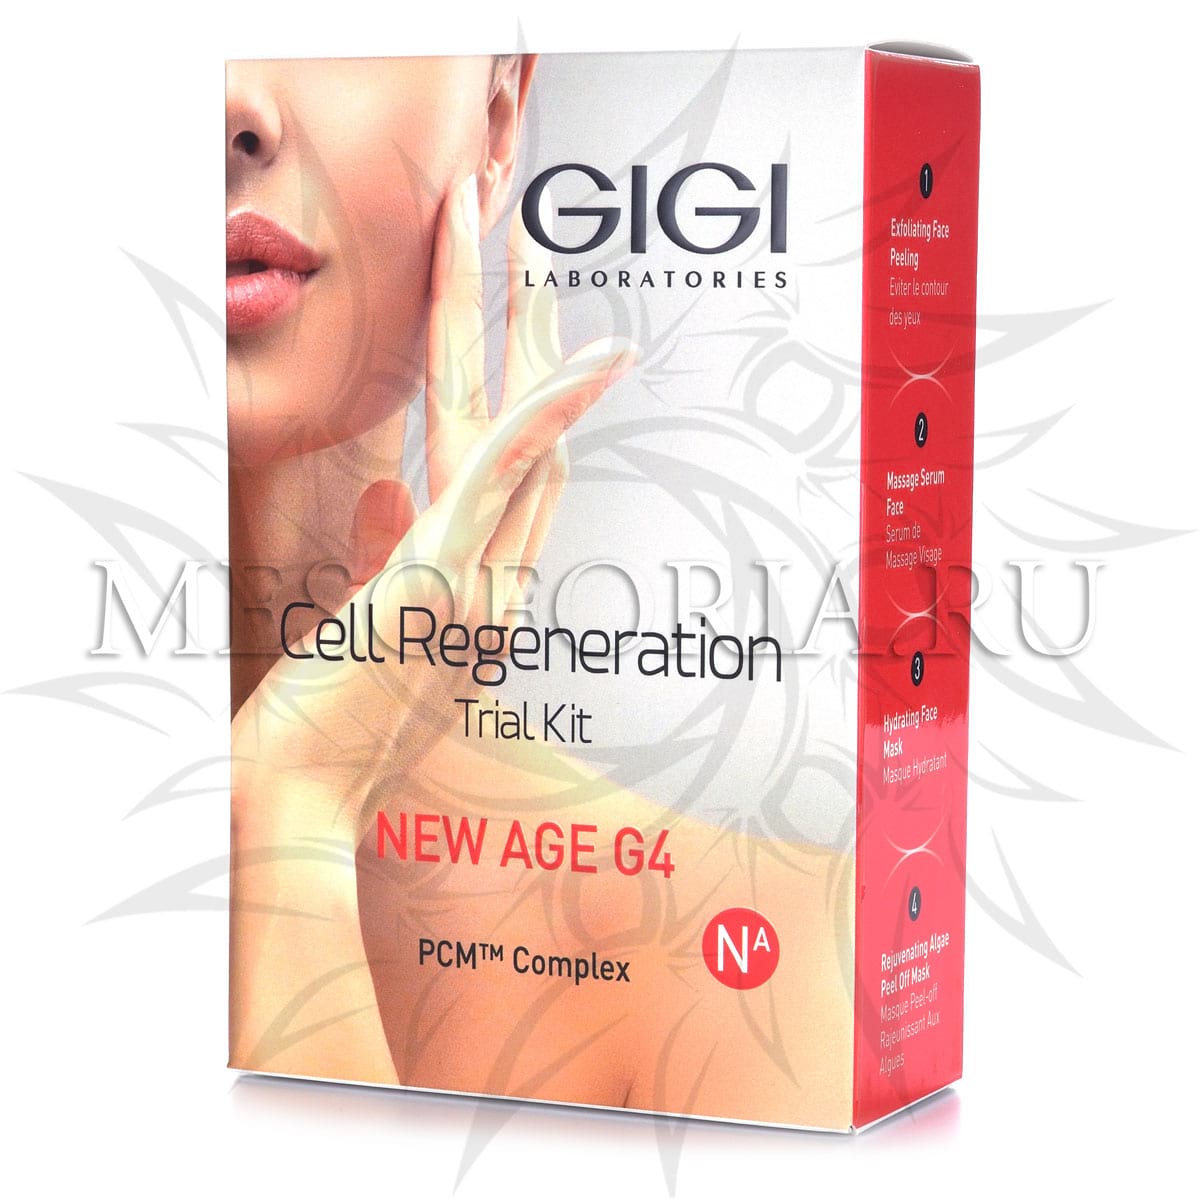 Набор на 4 процедуры / Cell Regeneration Trial Kit, New Age G4, GiGi (Джи Джи) – 1 шт